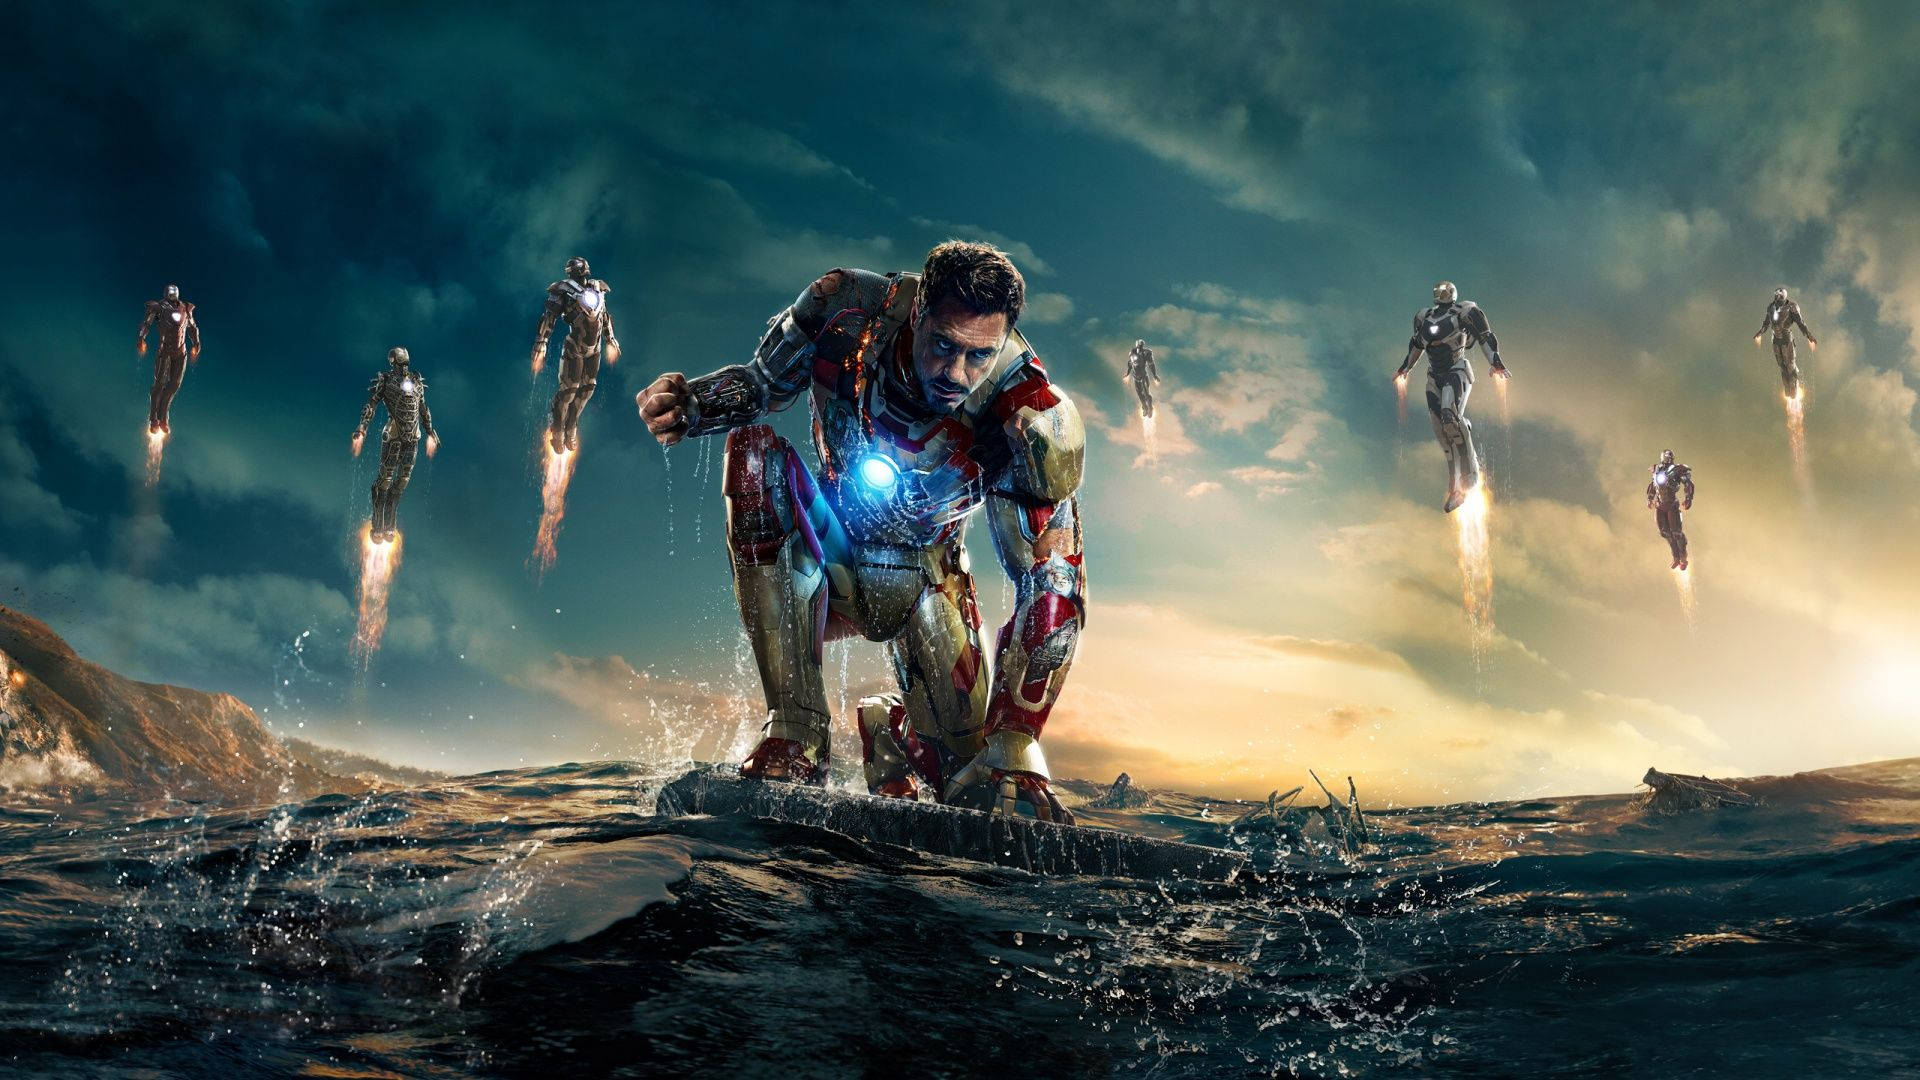 Iron Man Bedste Desktop Nogensinde Wallpaper